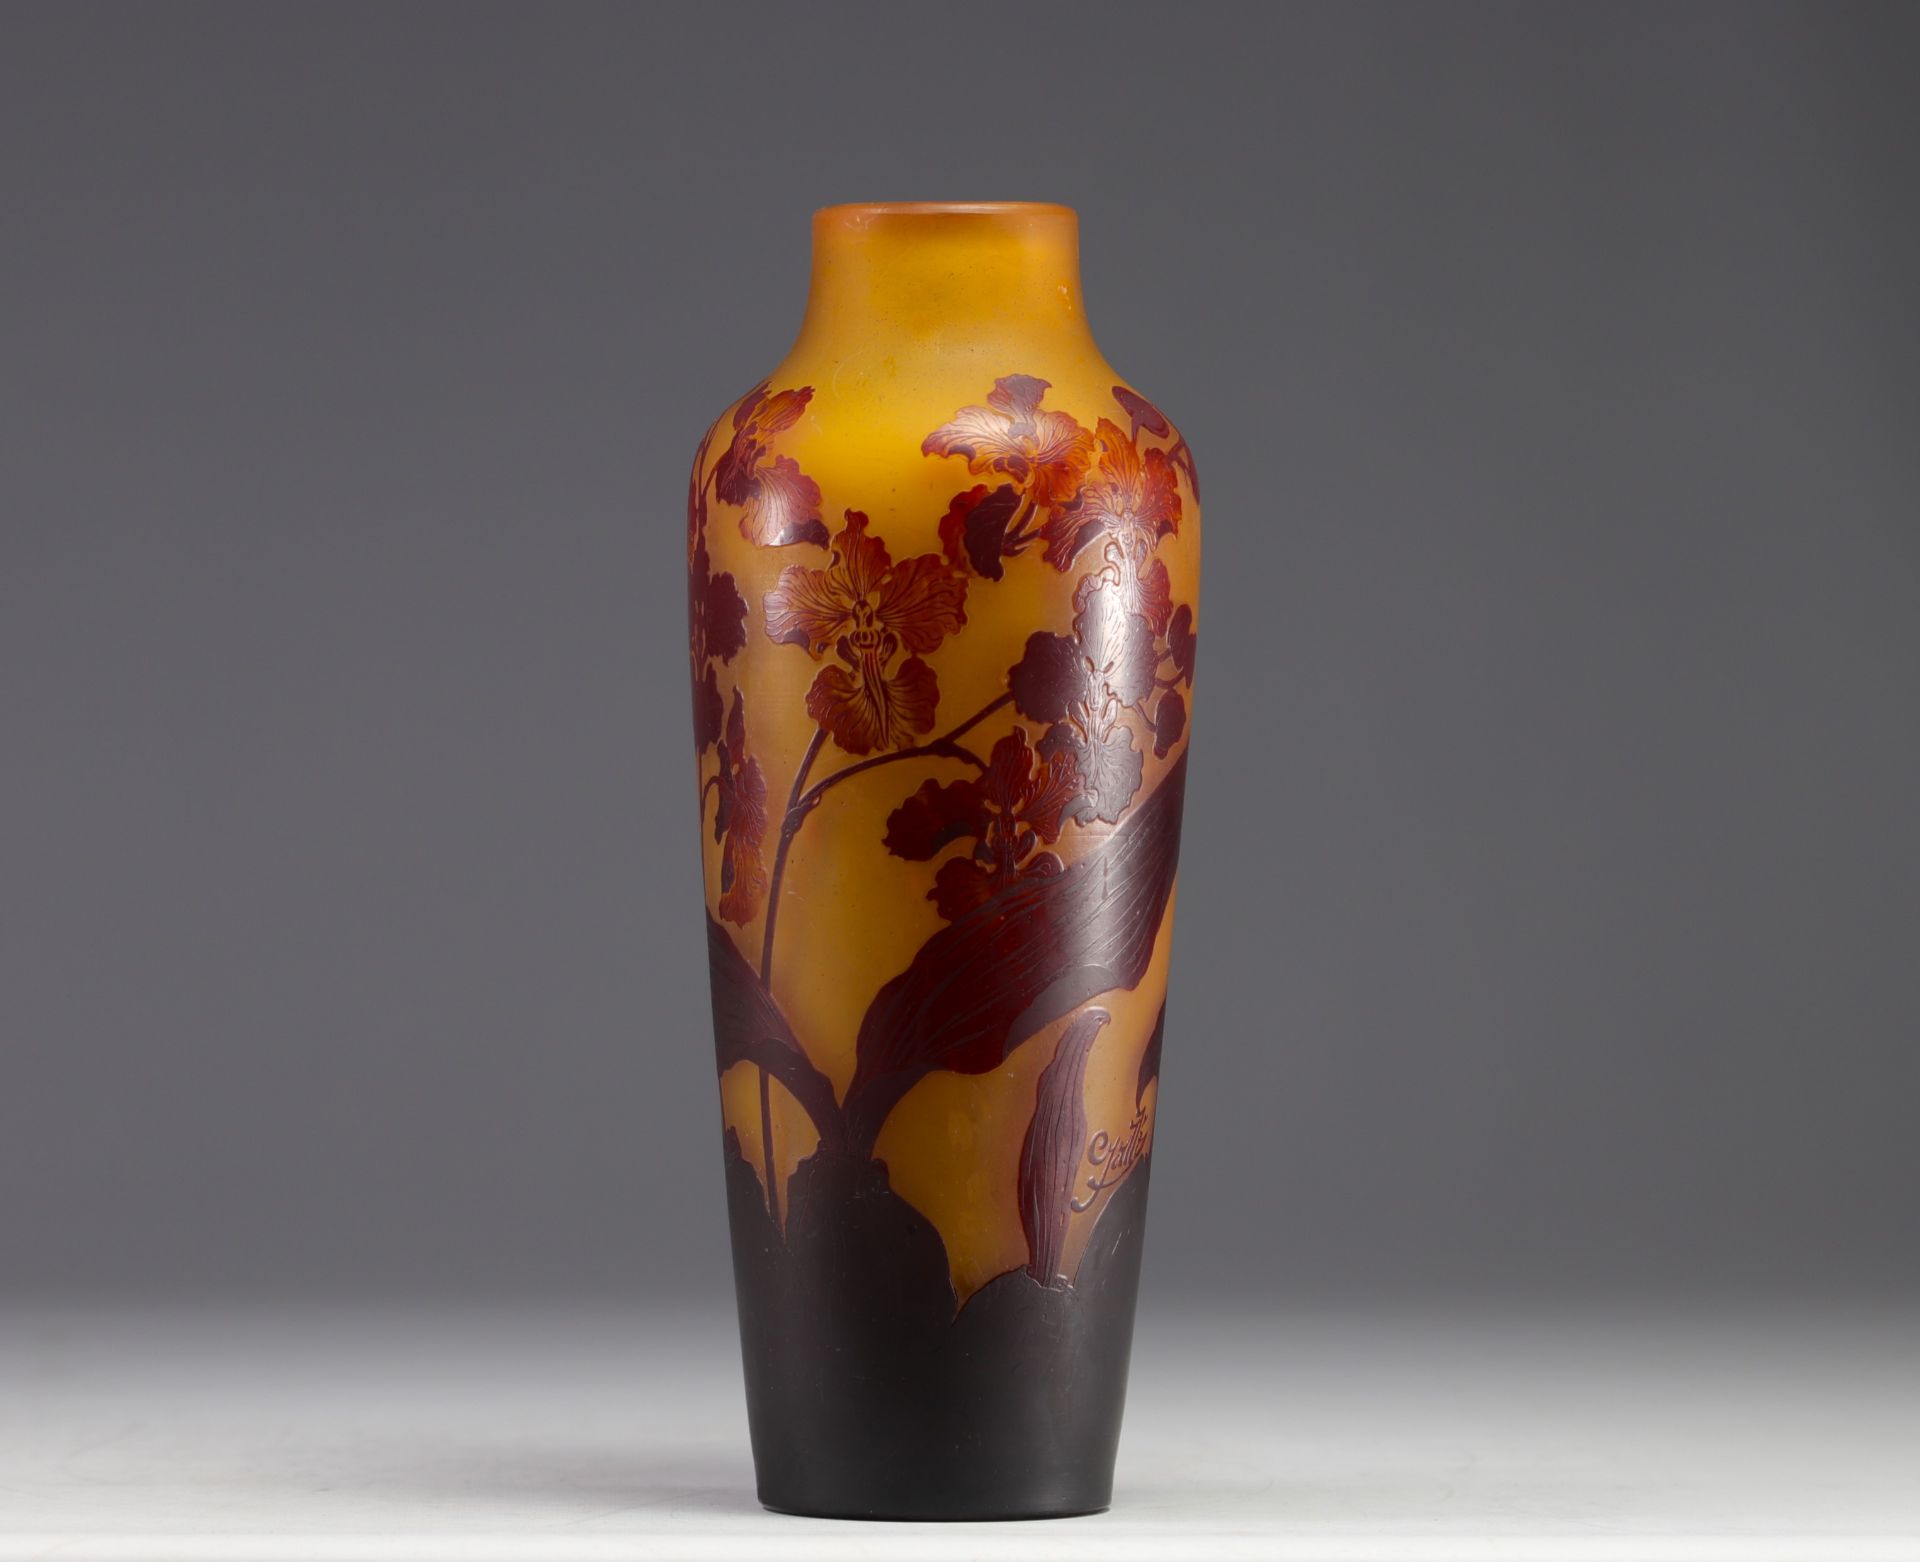 Emile GALLE - Multi-layered glass vase with iris design, signed. - Image 2 of 5